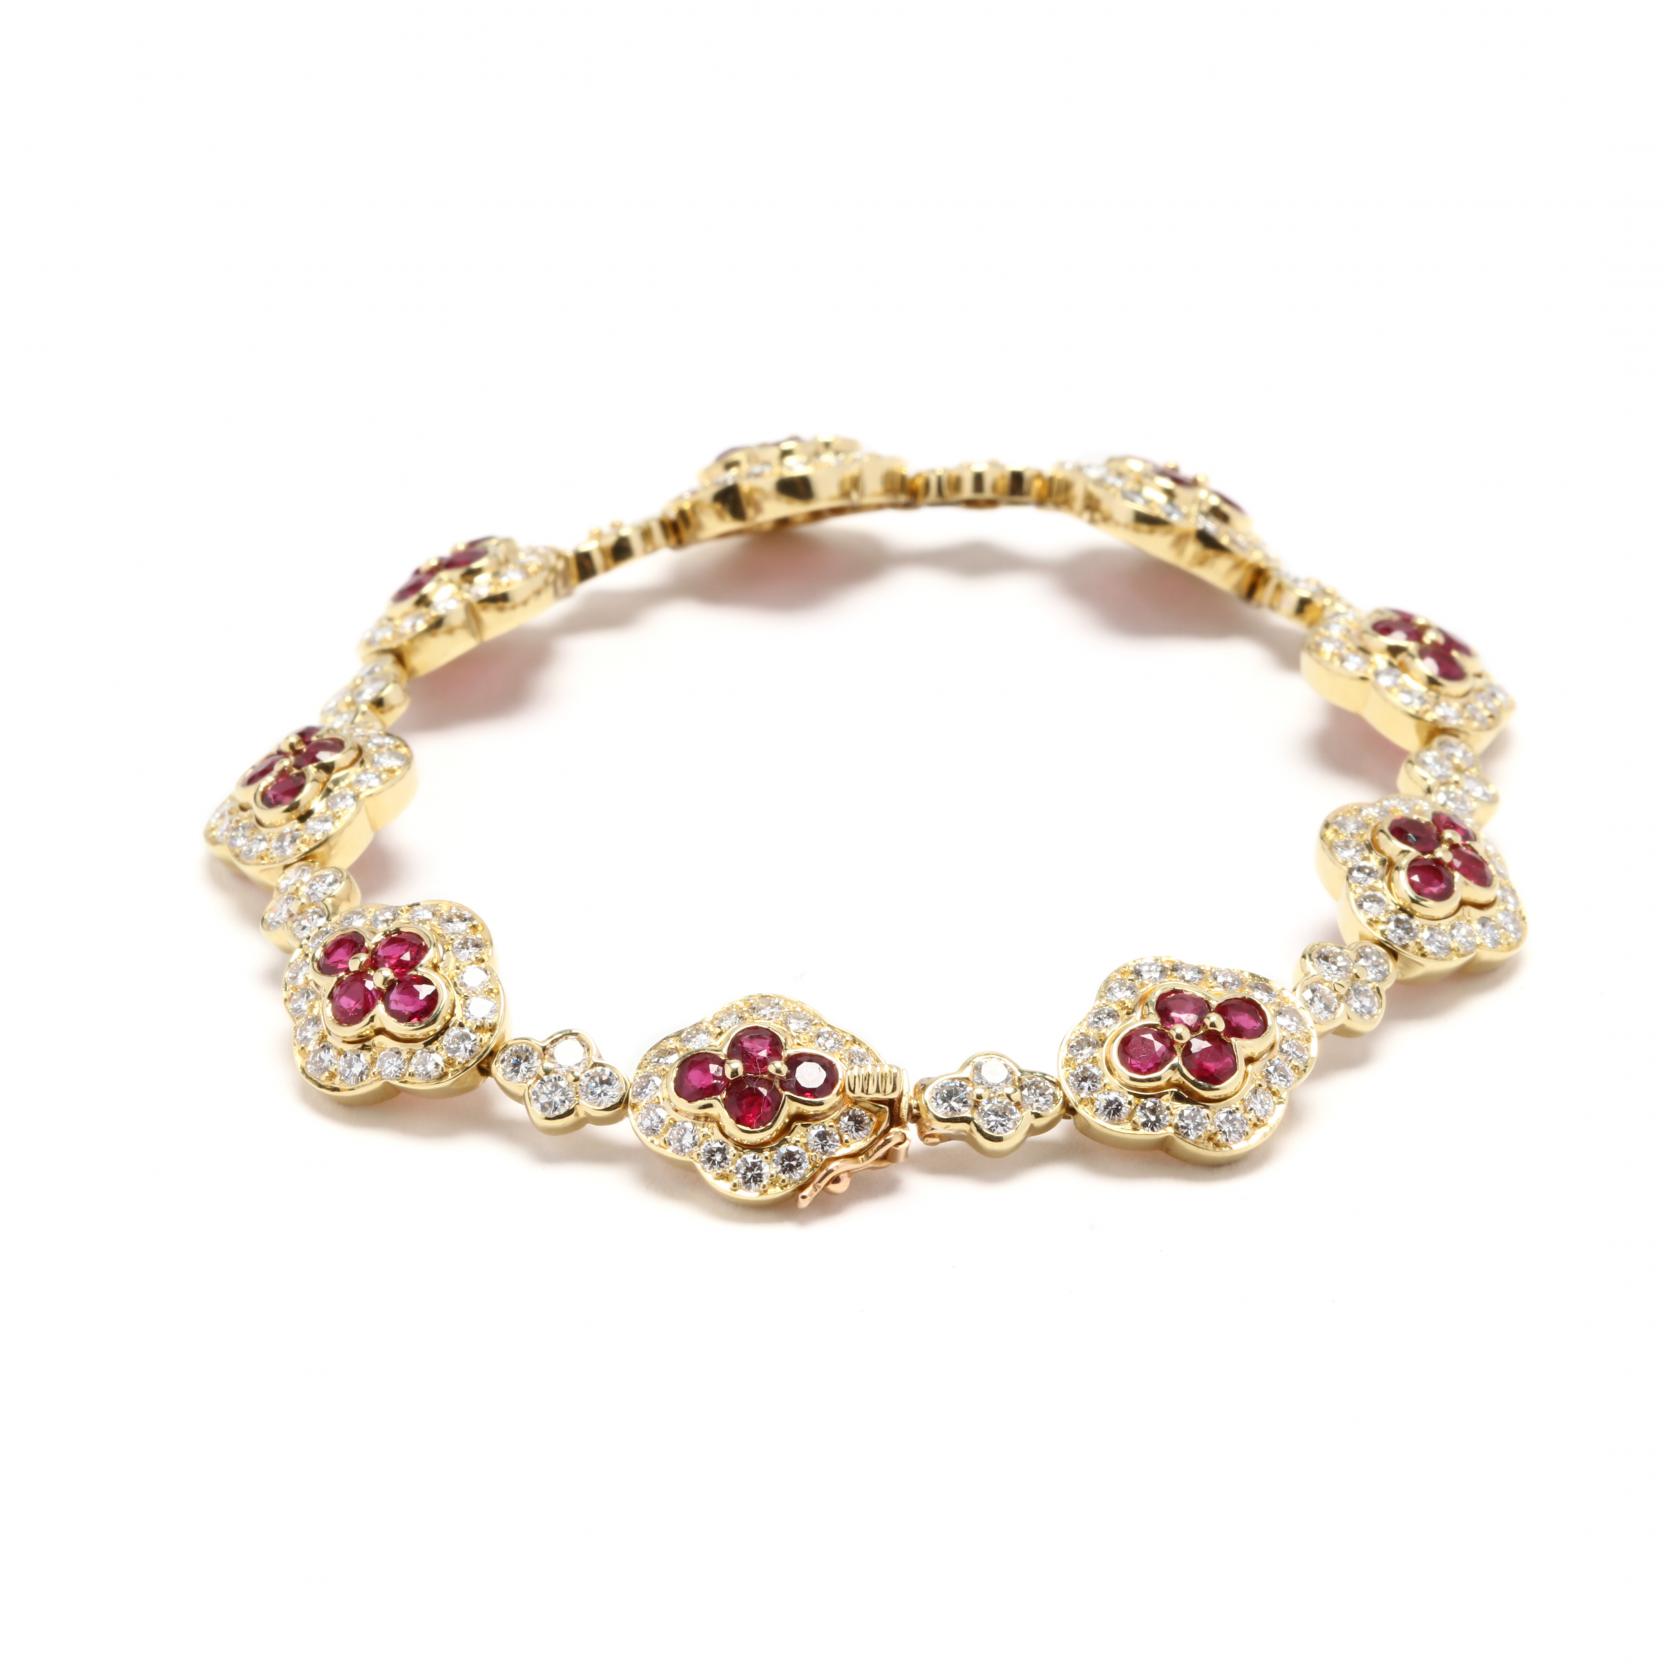 Gold, Diamond, and Ruby Bracelet - Image 2 of 4